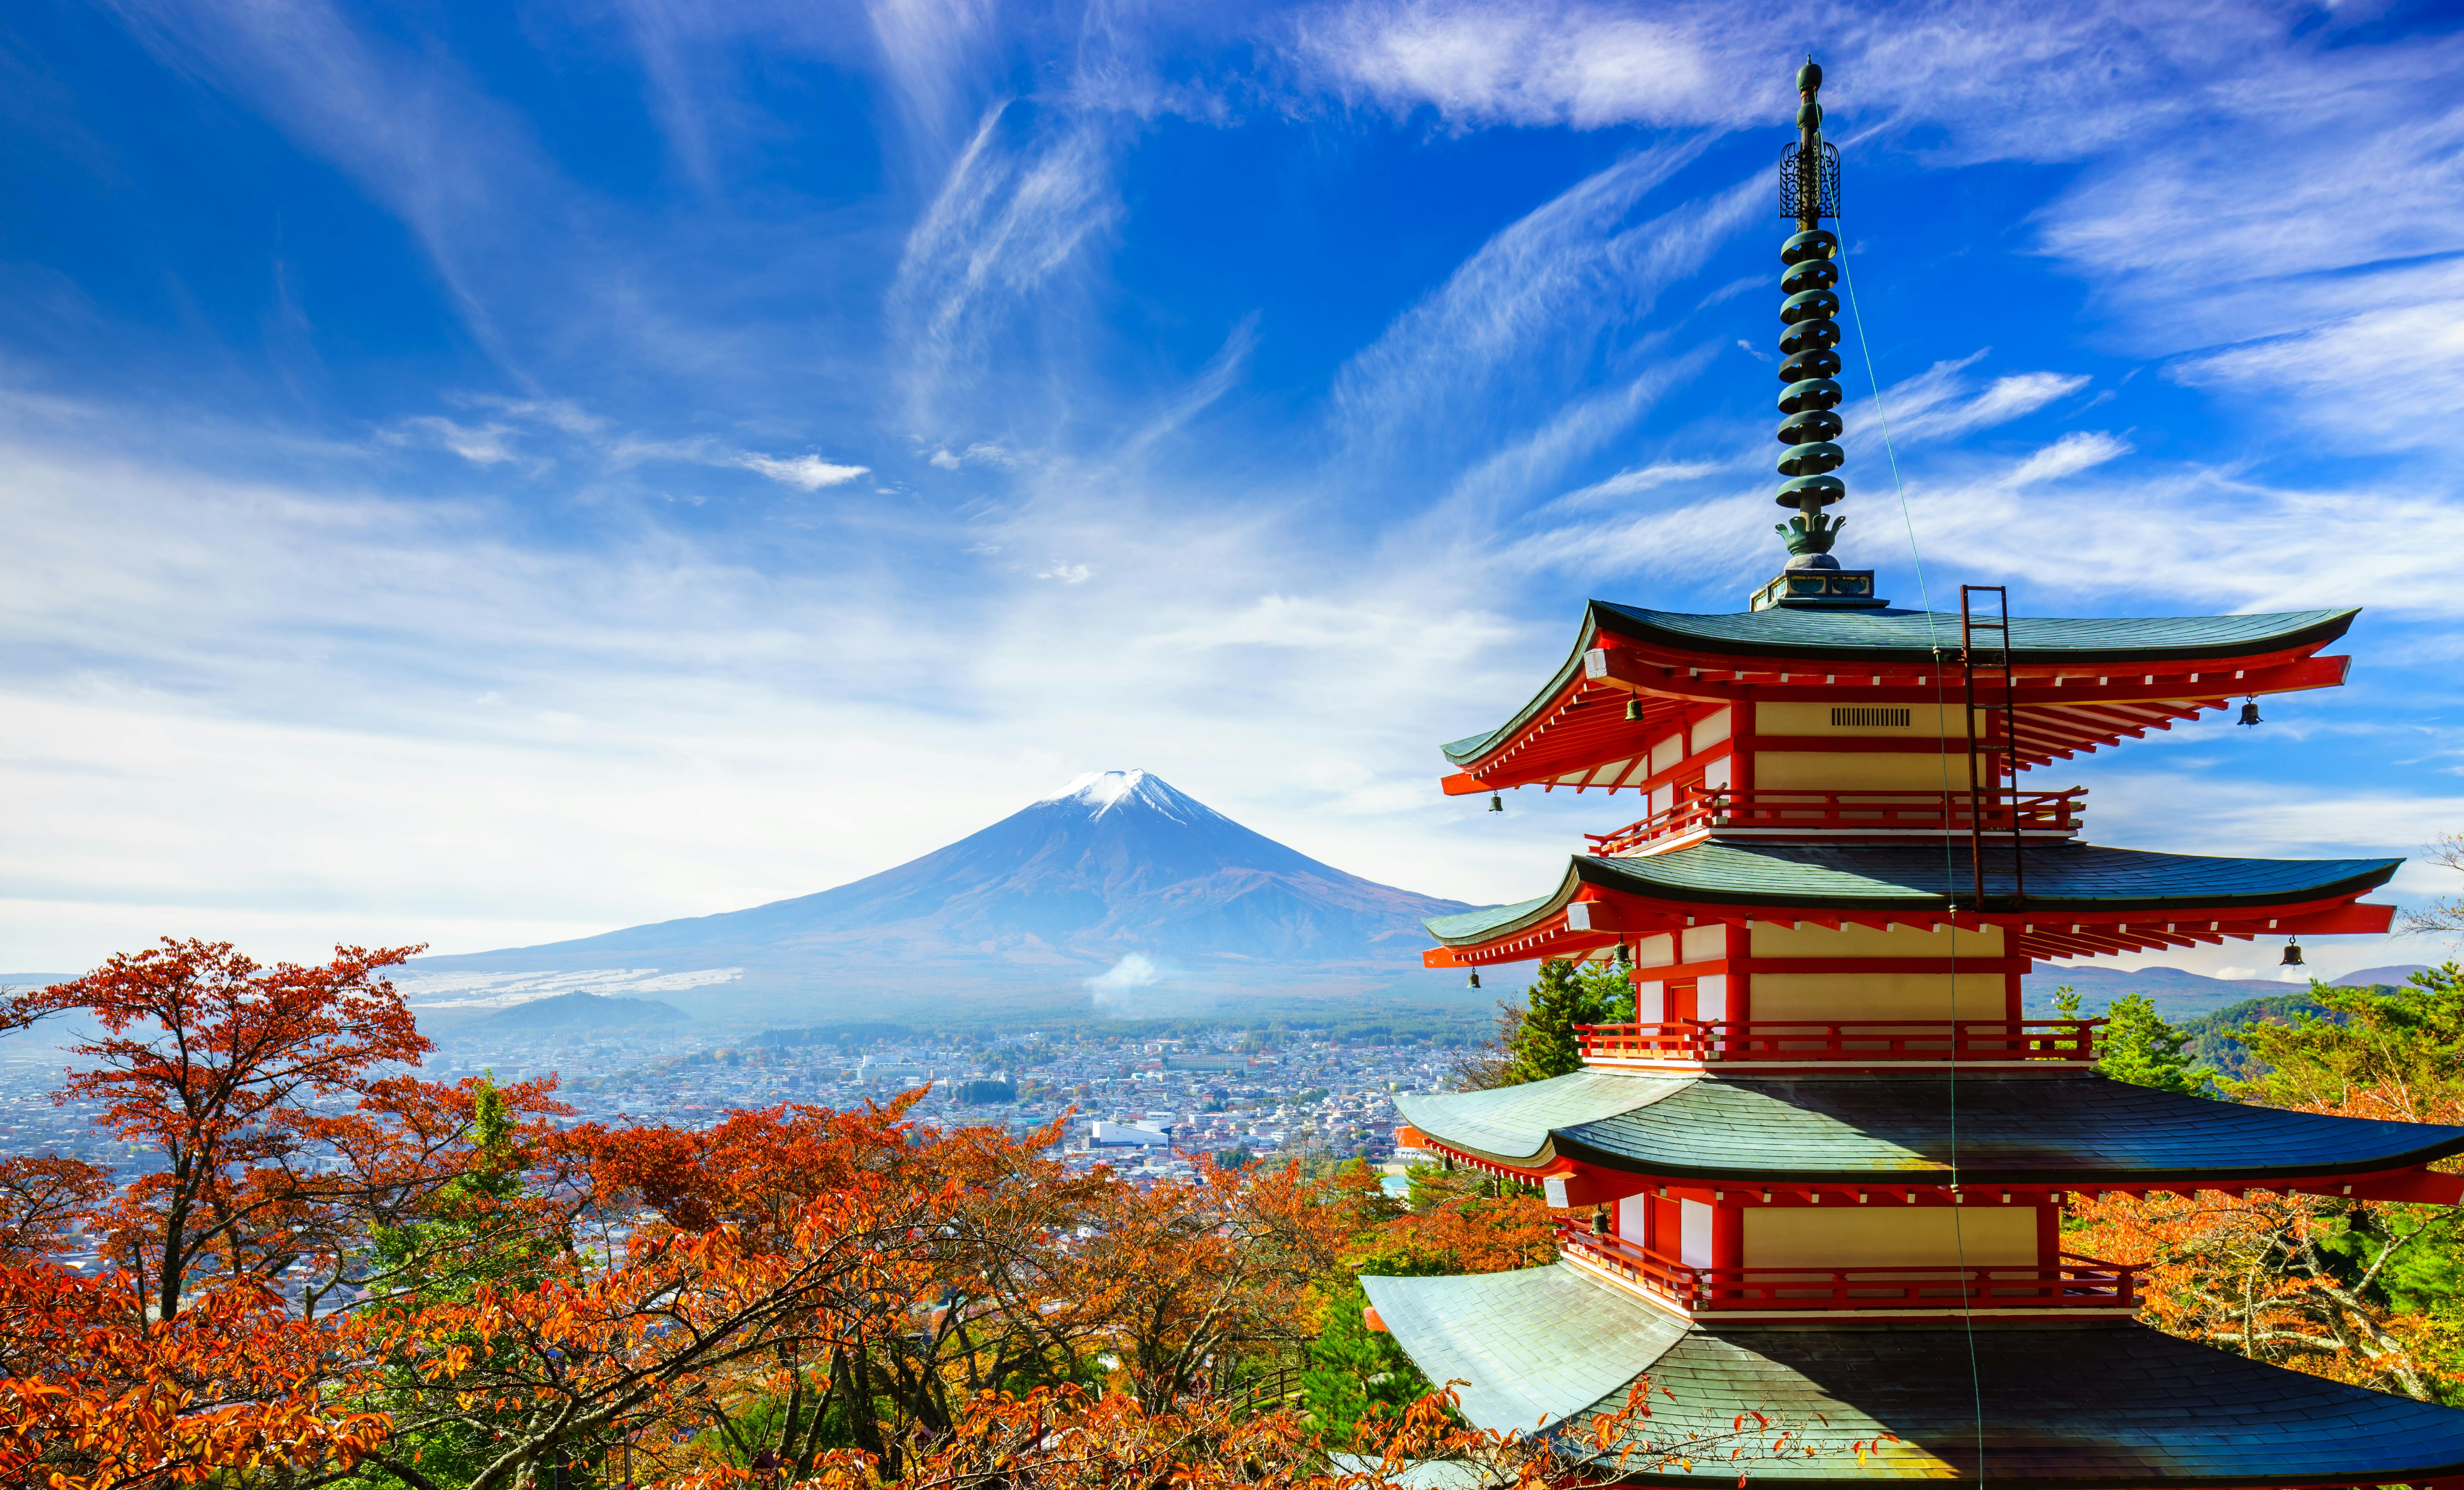 Breathtaking views of Mt. Fuji are everywhere in Japan.